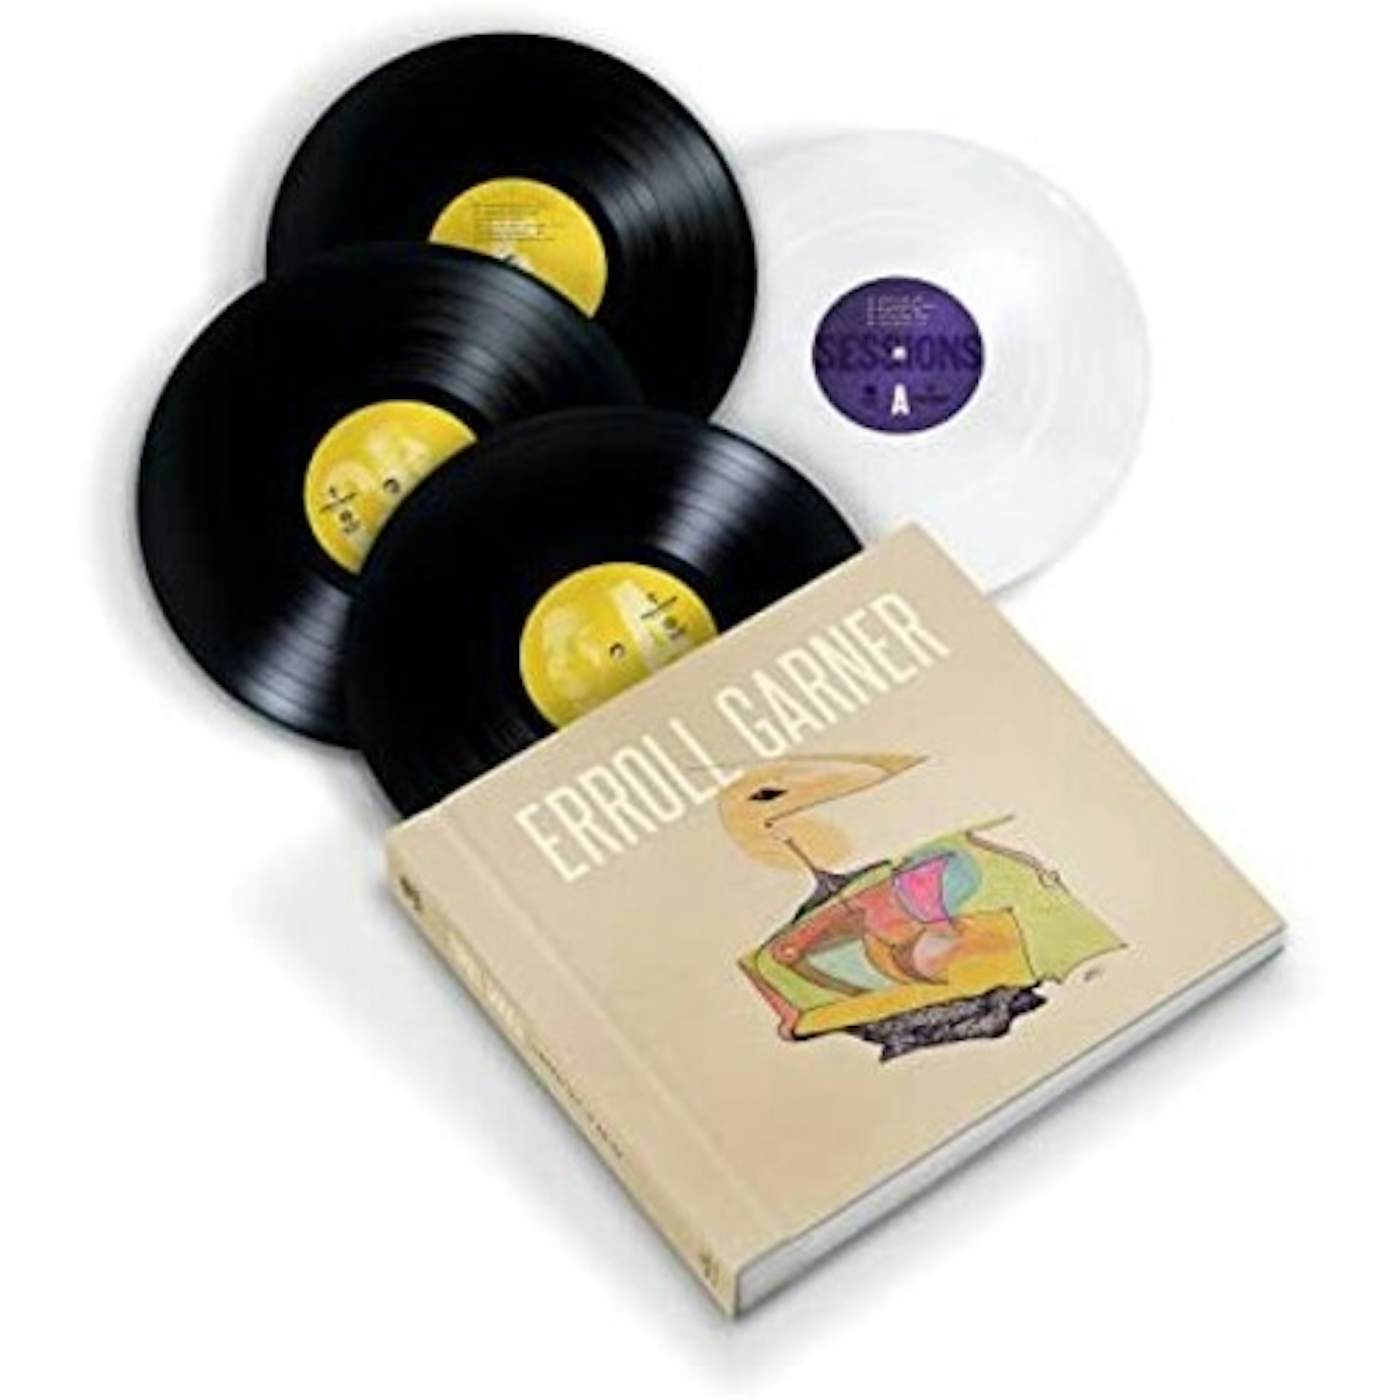 Erroll Garner LIBERATION IN SWING: THE OCTAVE RECORDS STORY Vinyl Record